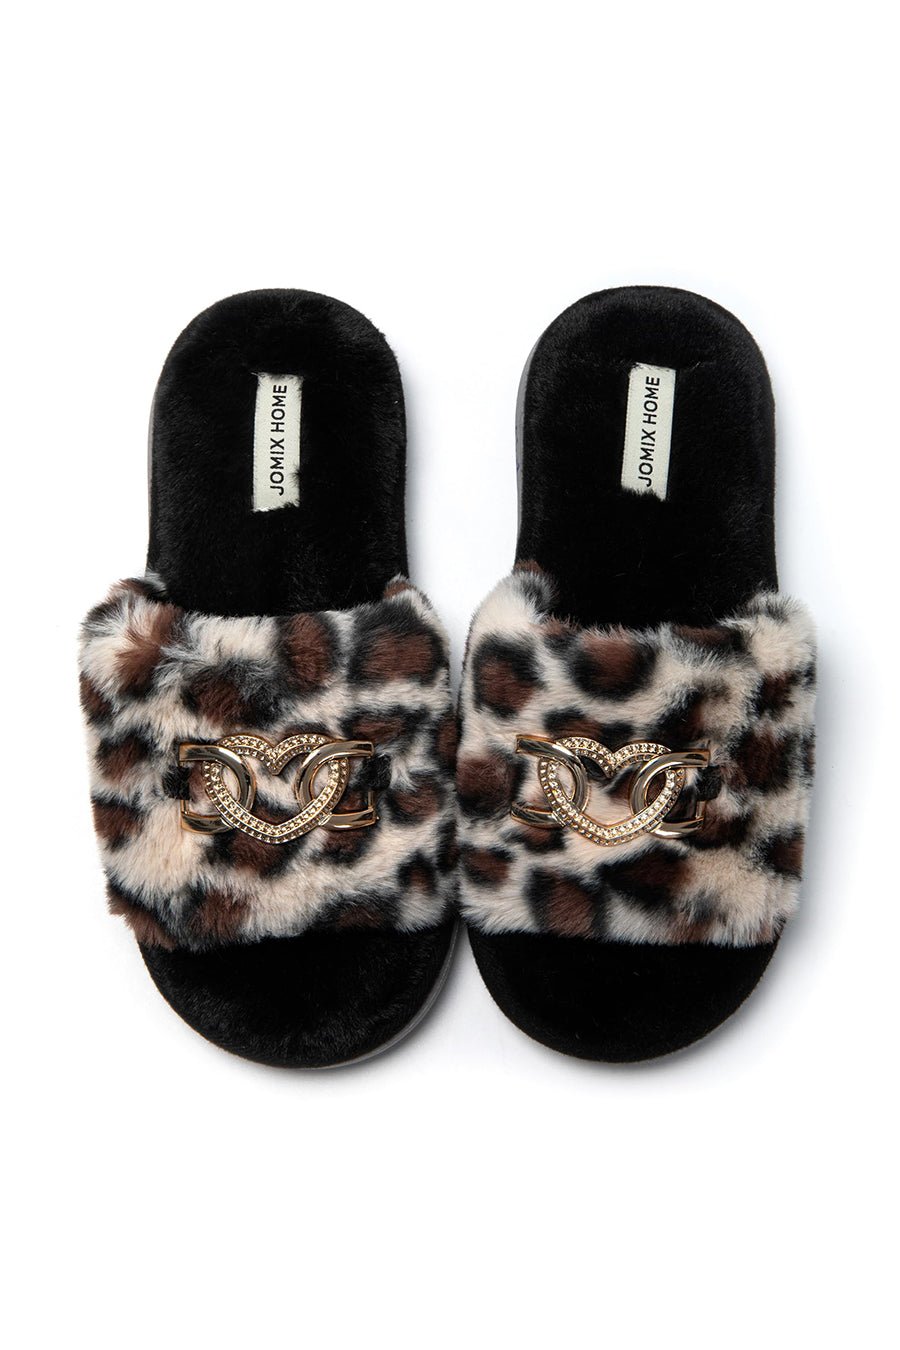 JOMIX Pantofole Donna Invernali Ciabatte Leopardate Punta Aperta MD8647